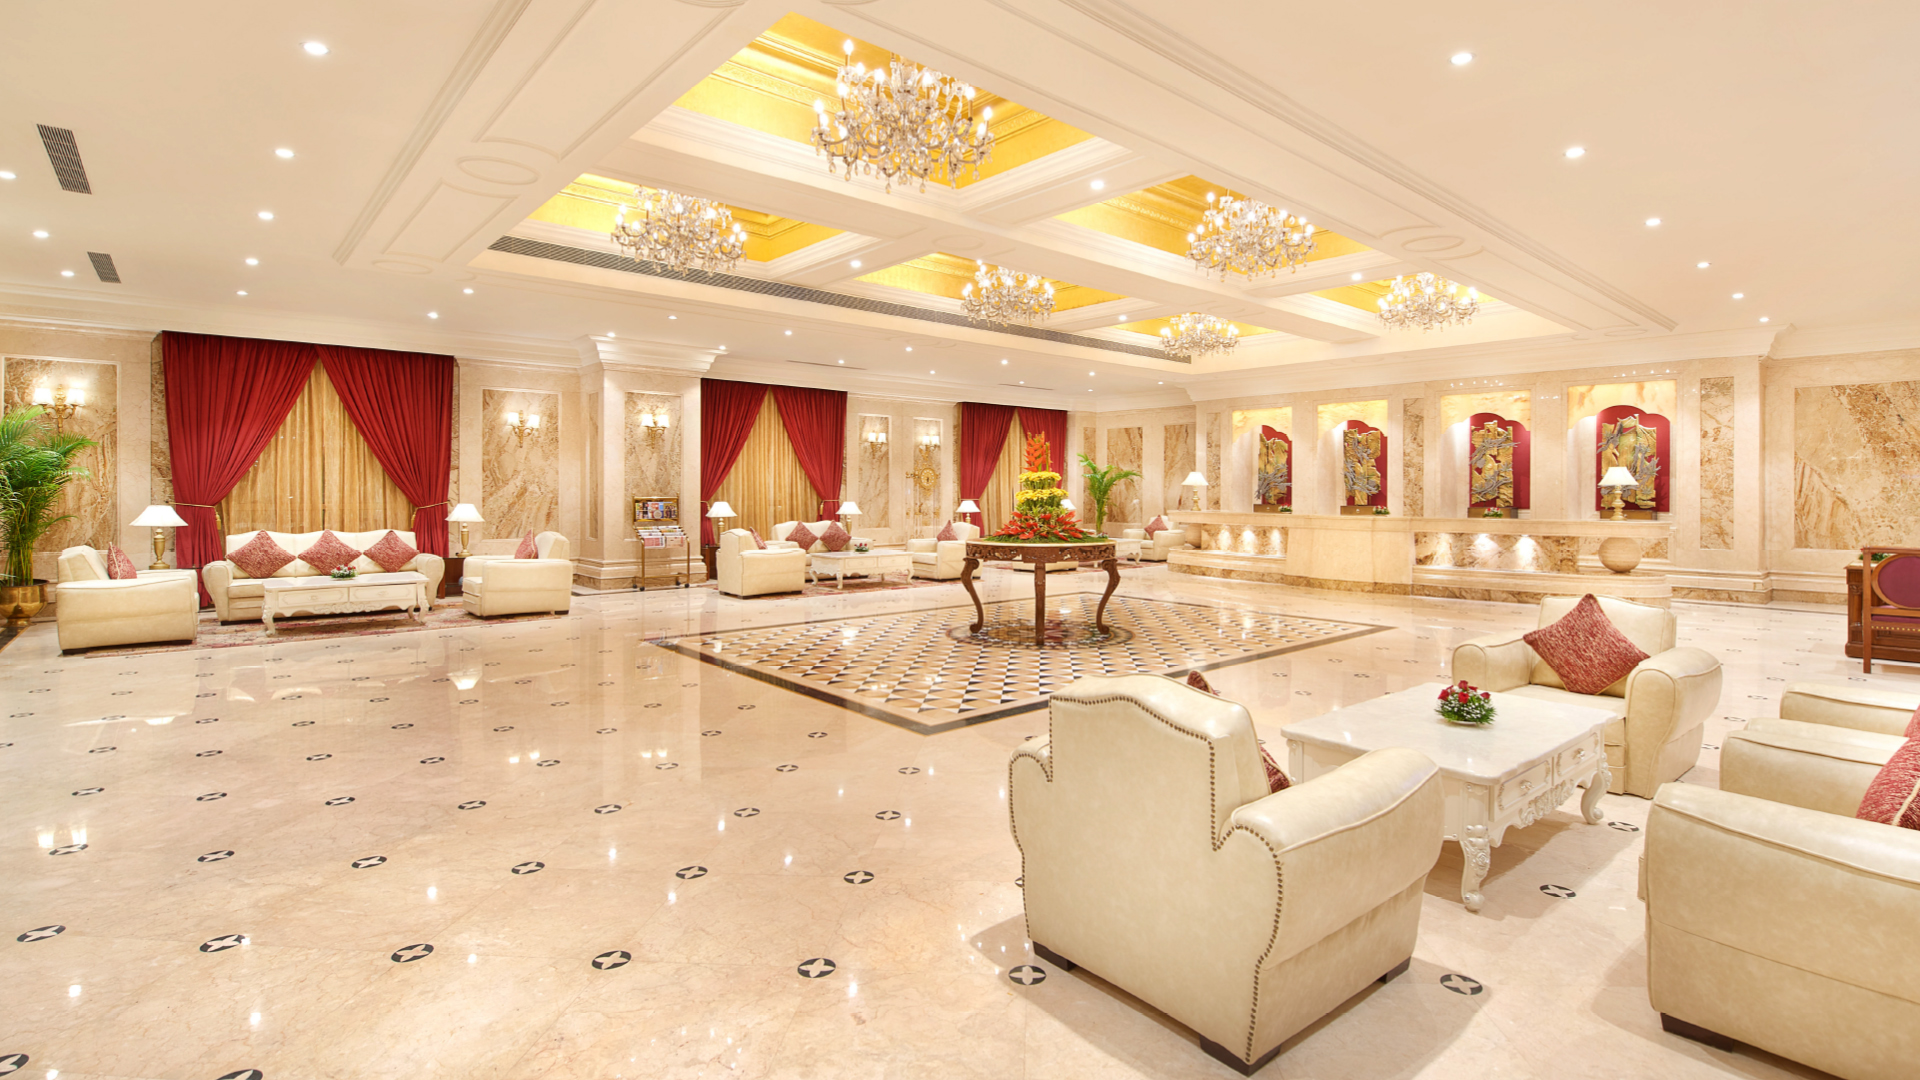 Luxury Hotels & Resorts in Chennai | Accord Metropolitan hotels Chennai | Star hotel for business conference Chennai